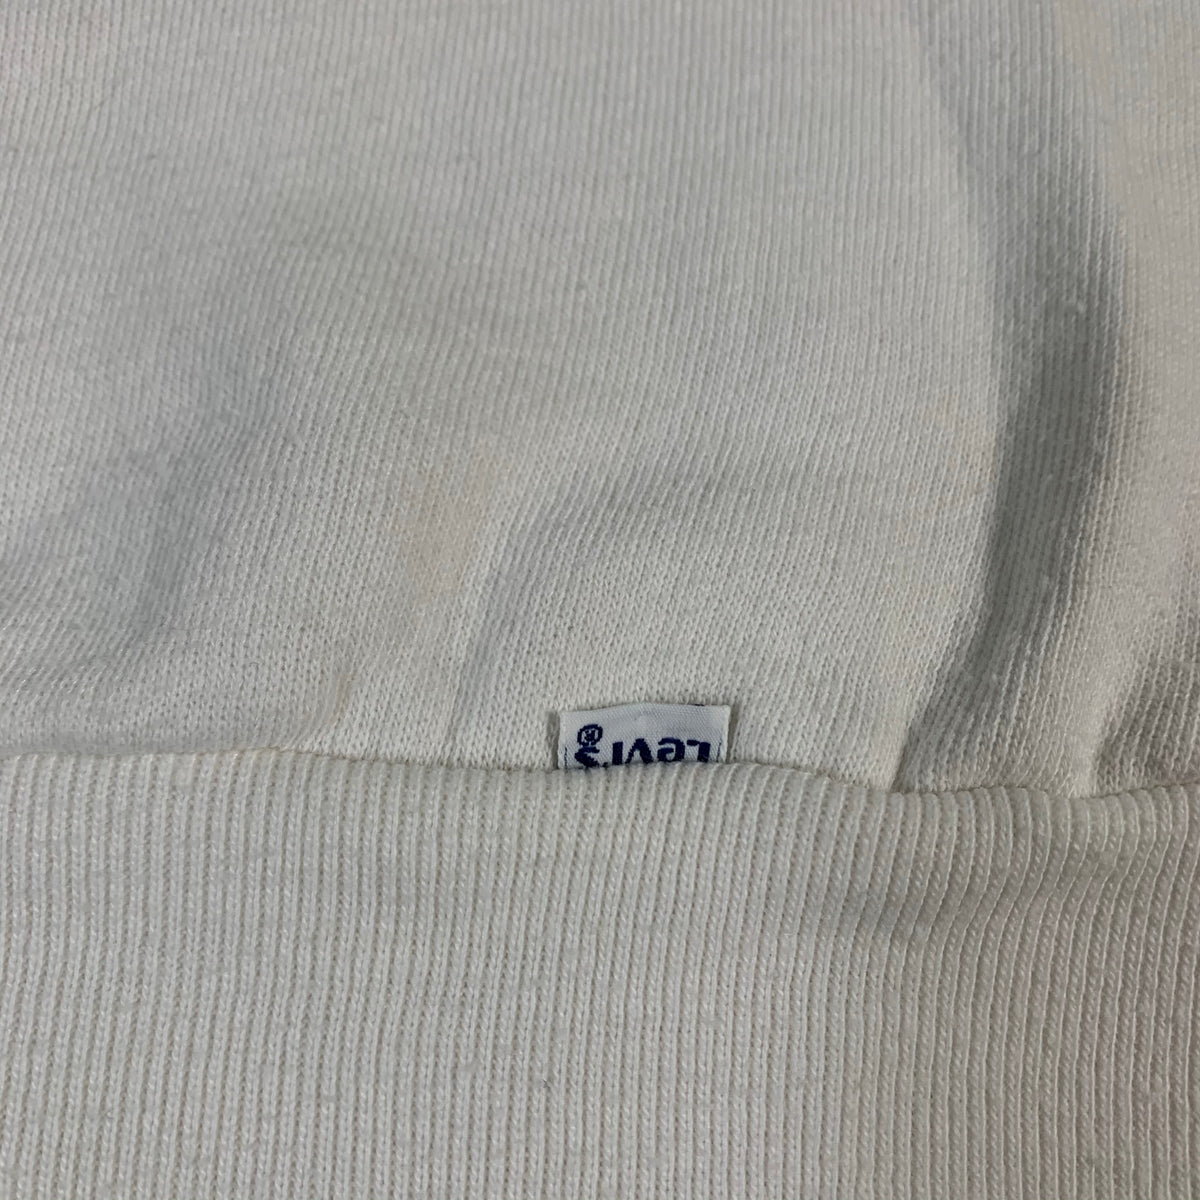 Vintage USA Olympics “Levi’s White Tab” Sleeveless Sweatshirt